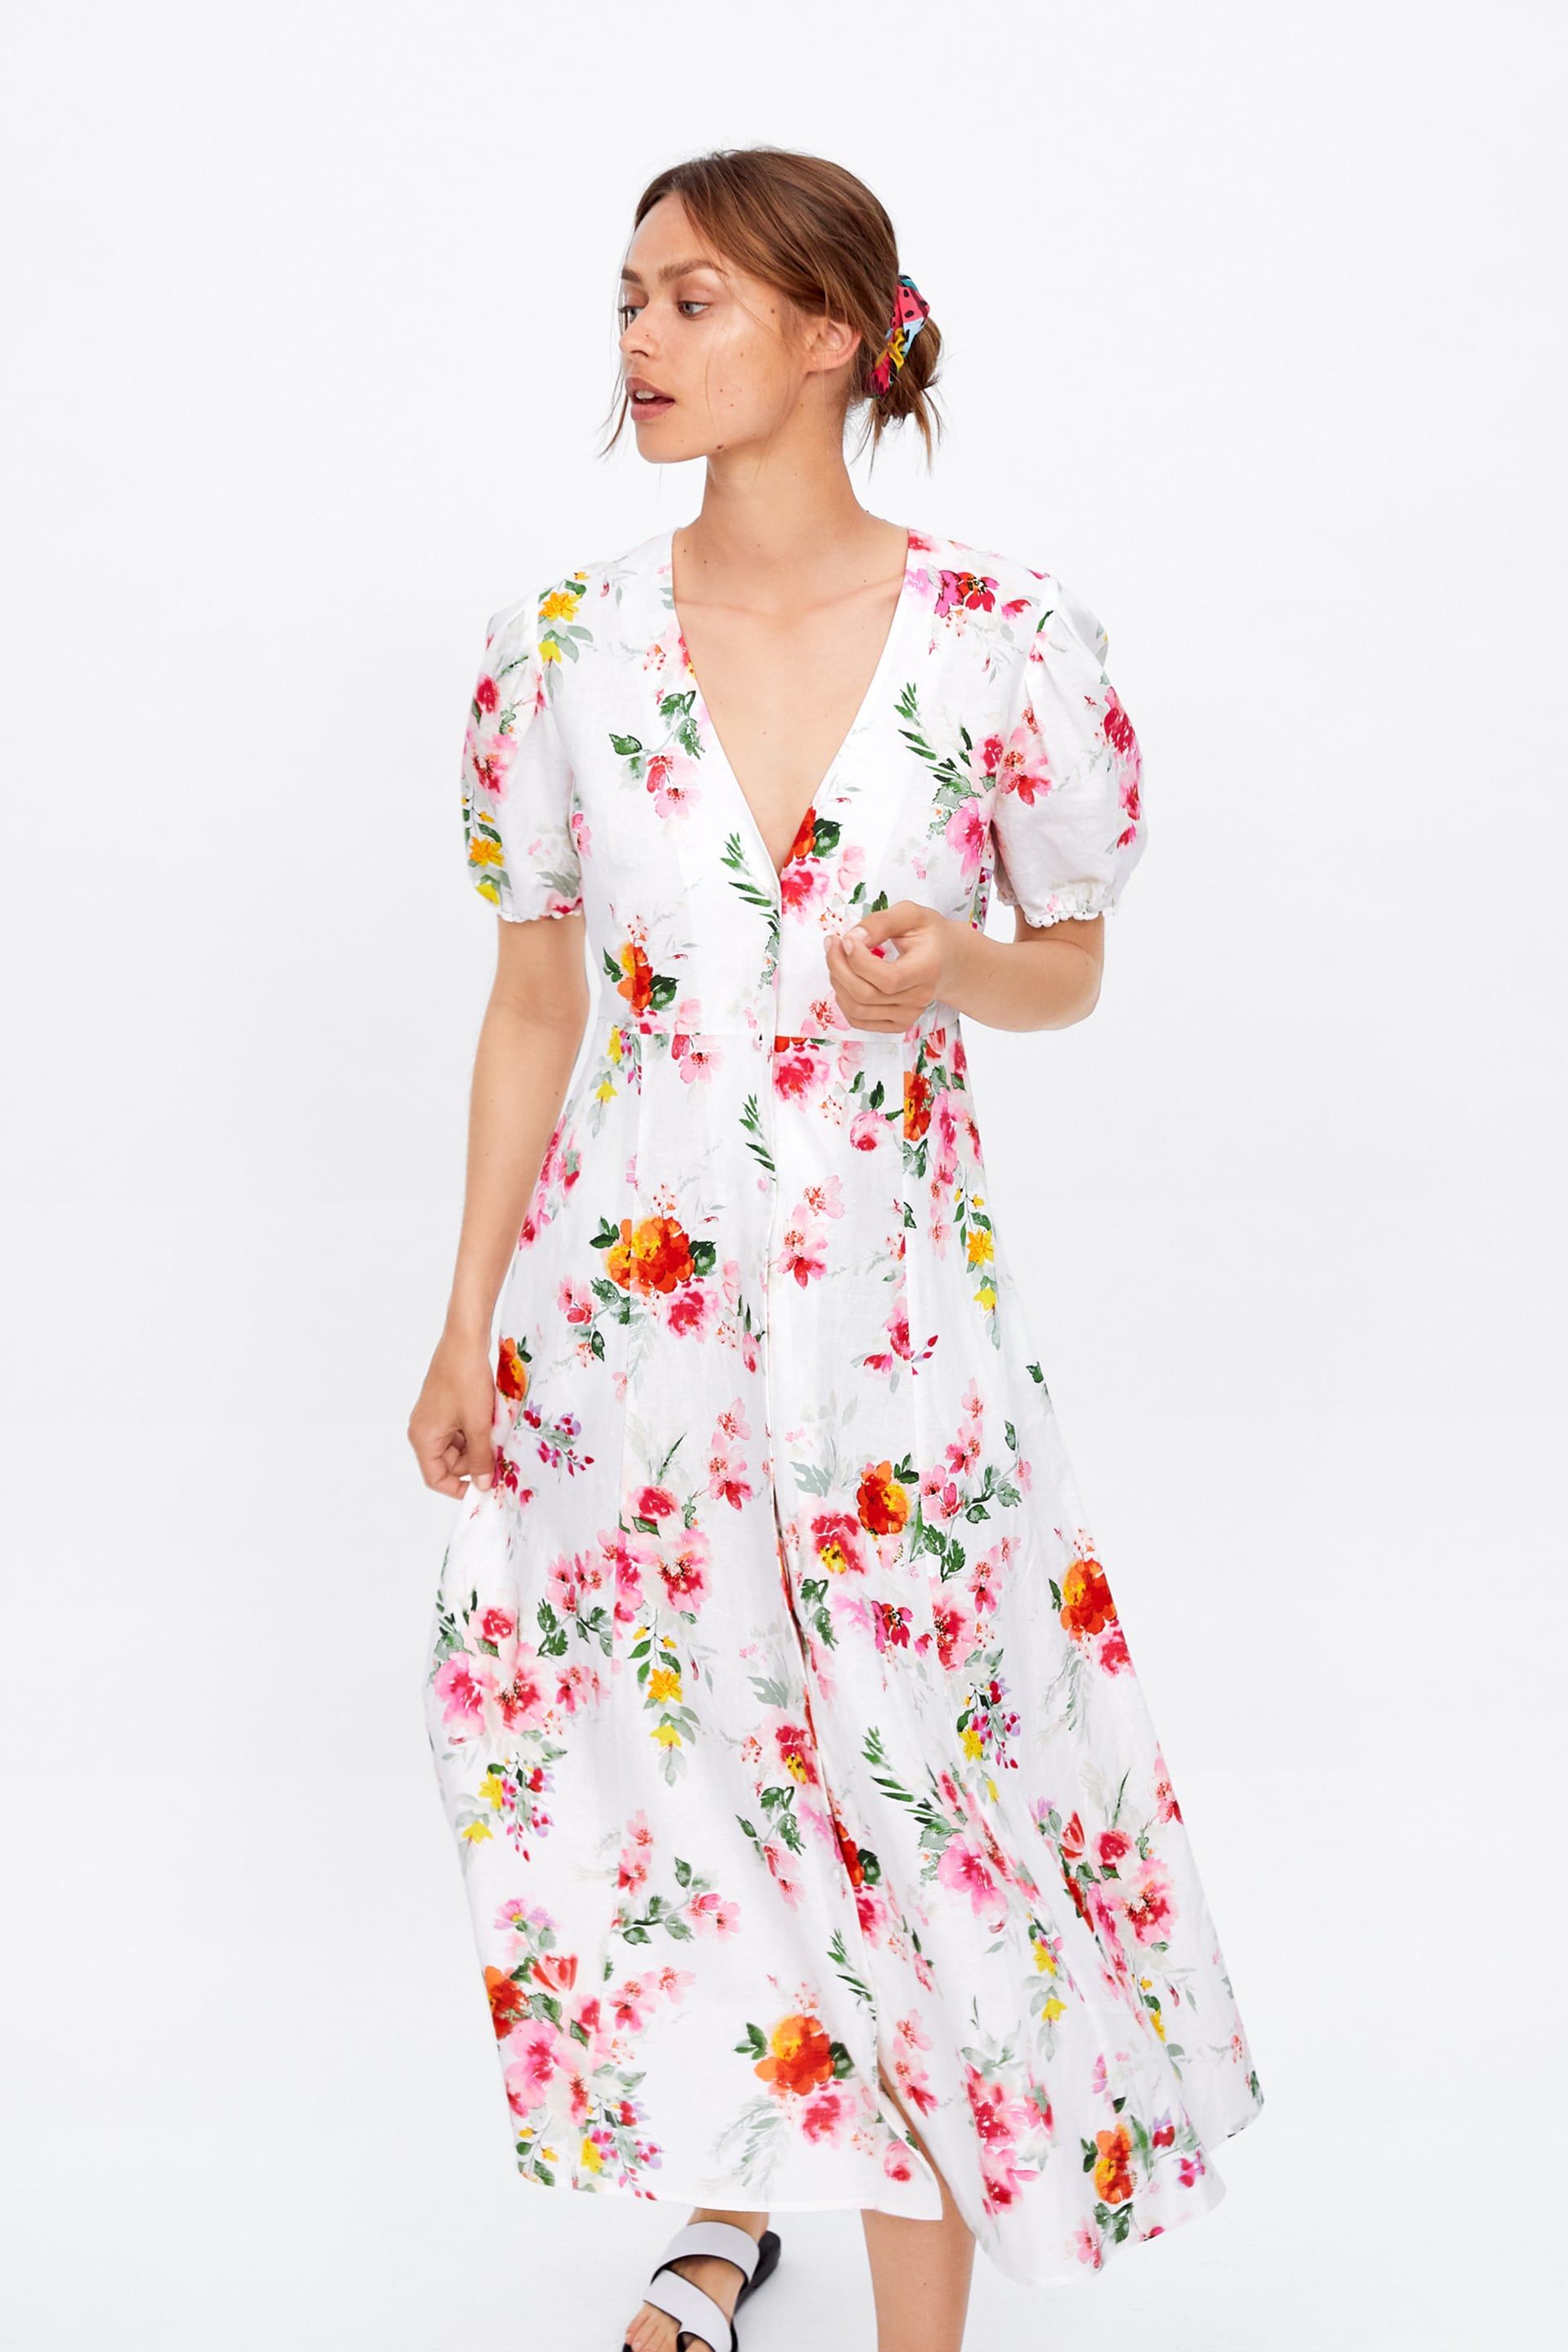 Saldi Zara estate 2019, lo shopping online dei vestiti in saldo